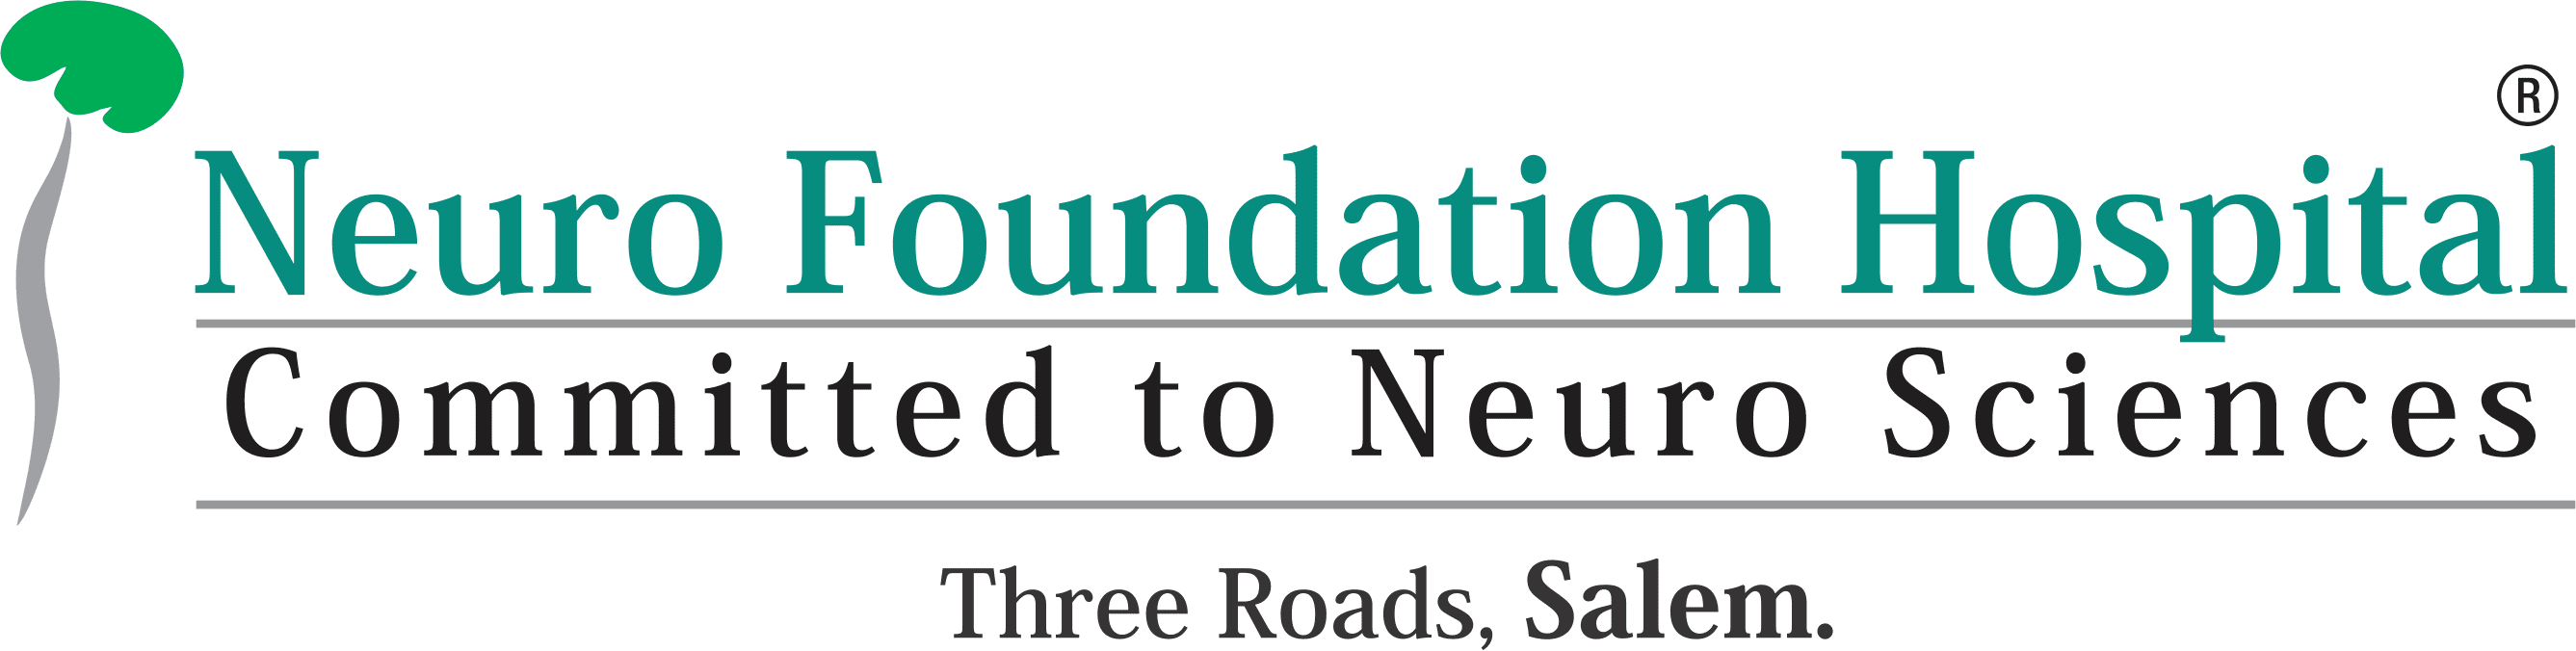 Neuro Foundation